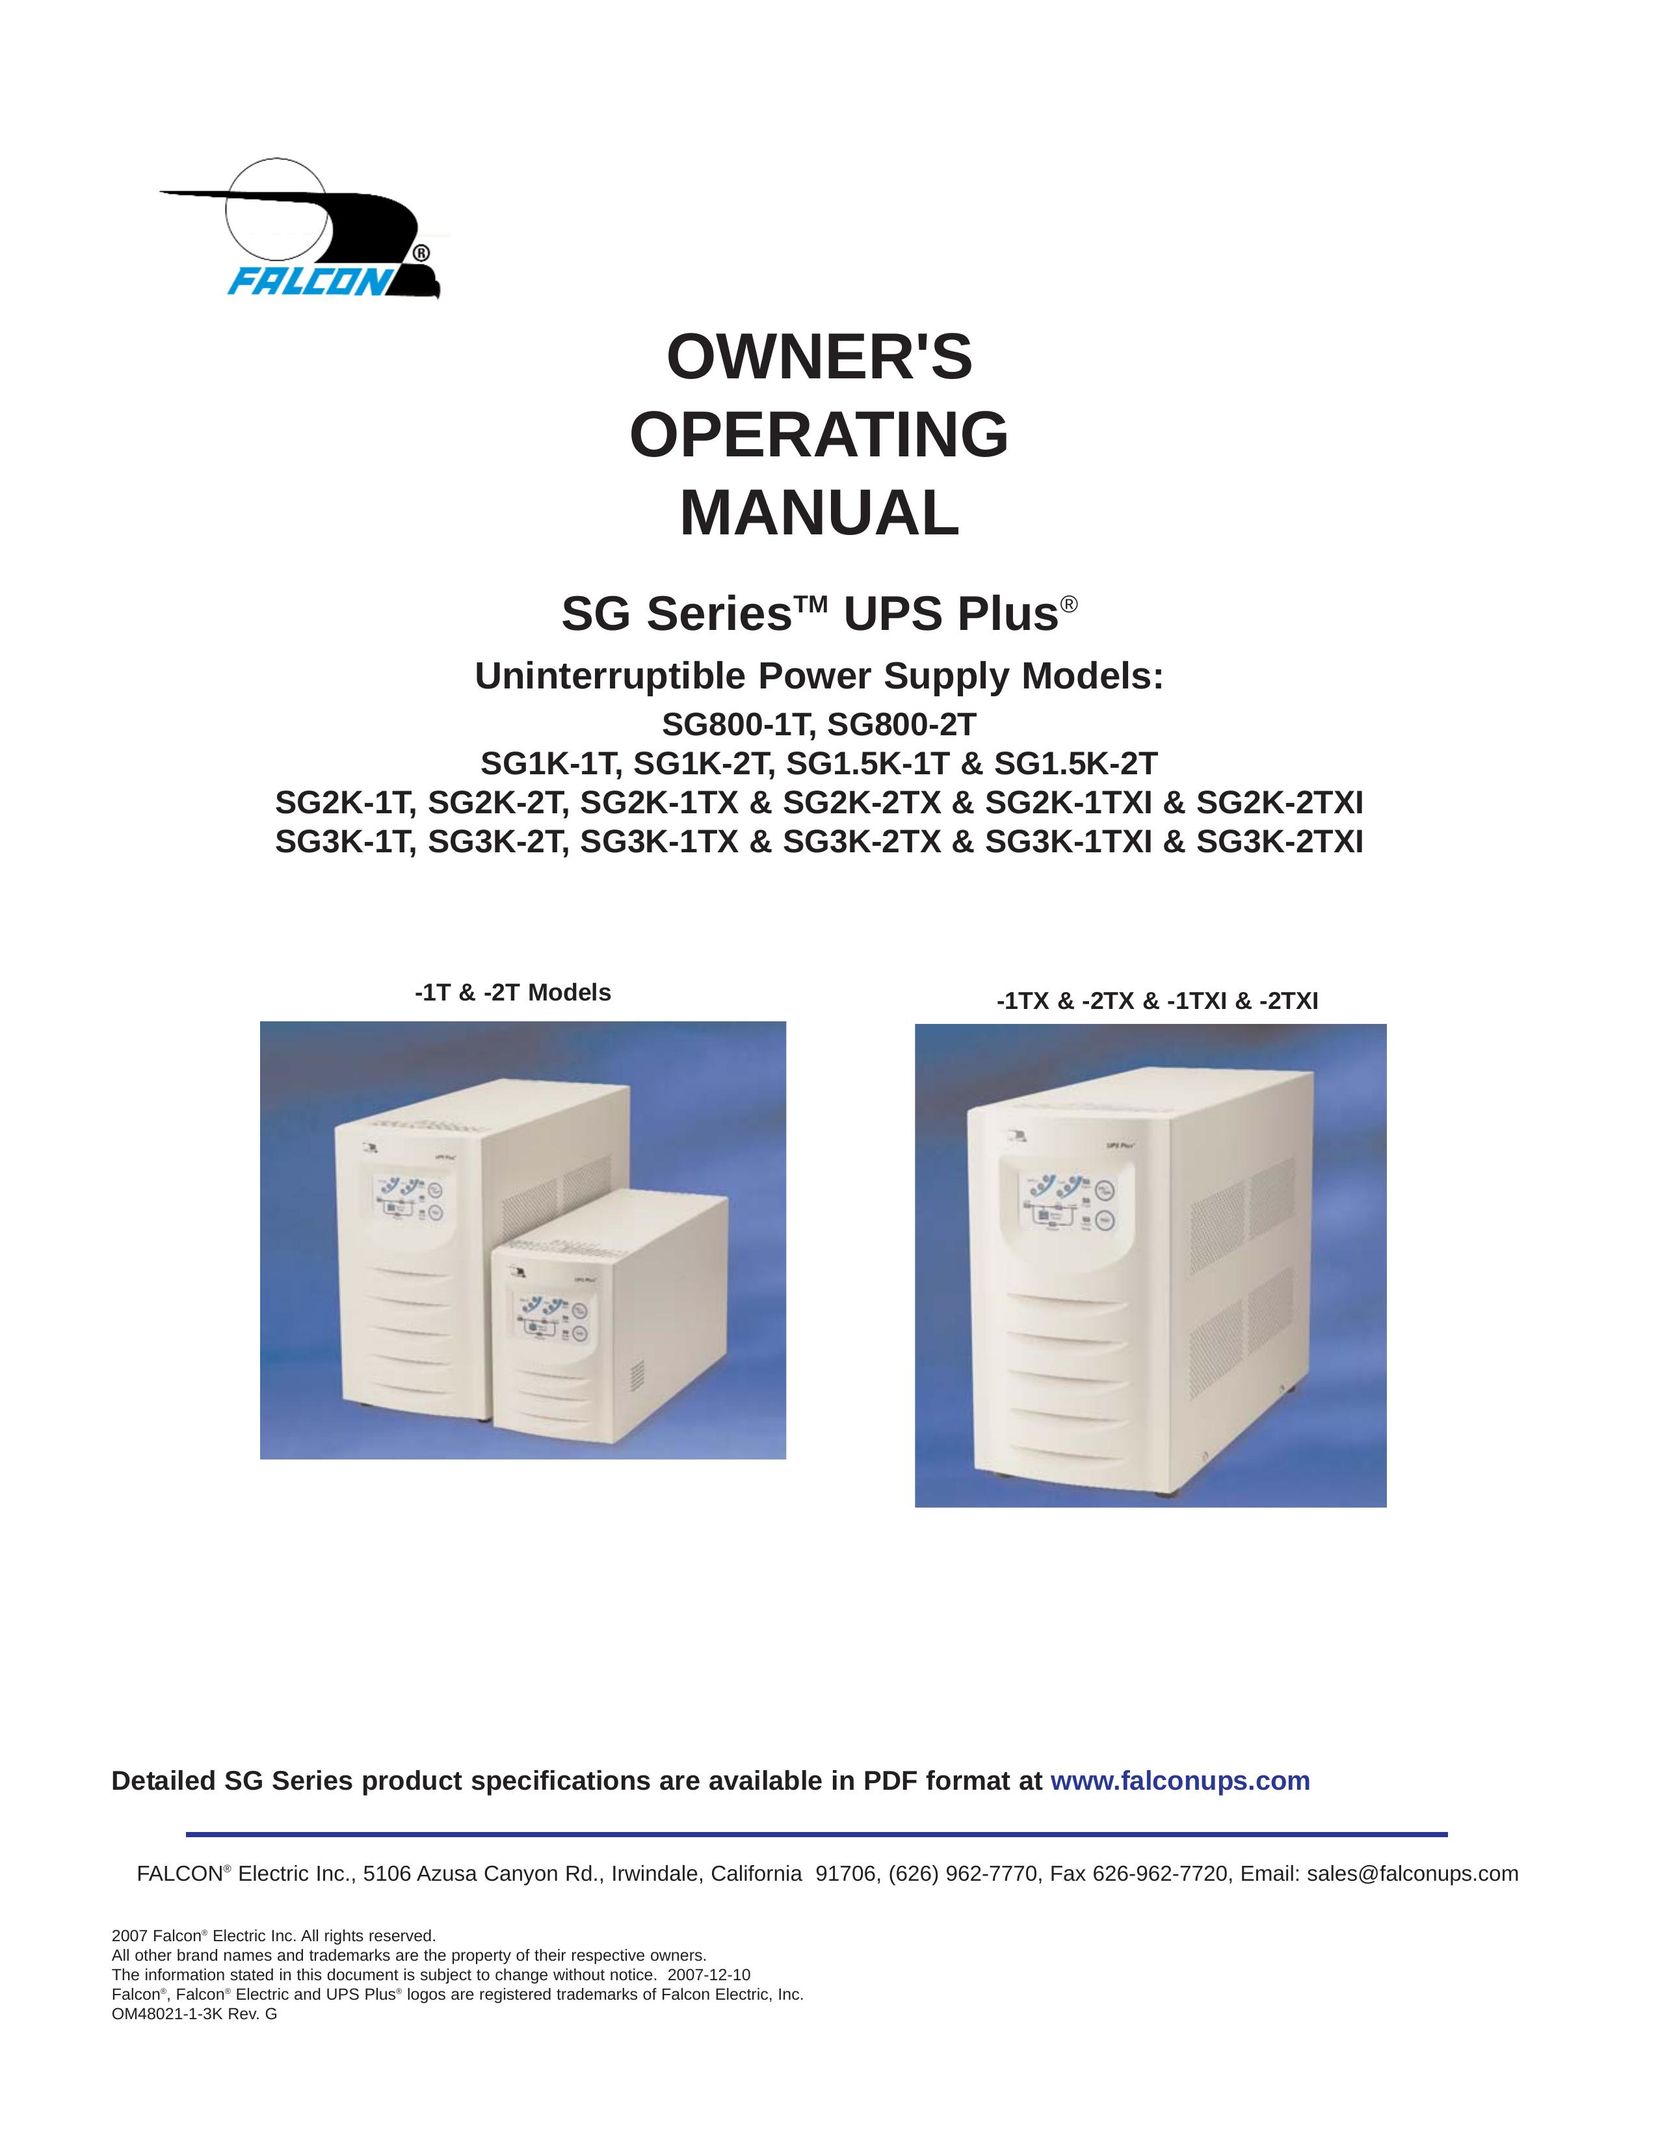 Falcon SG800-1T Power Supply User Manual